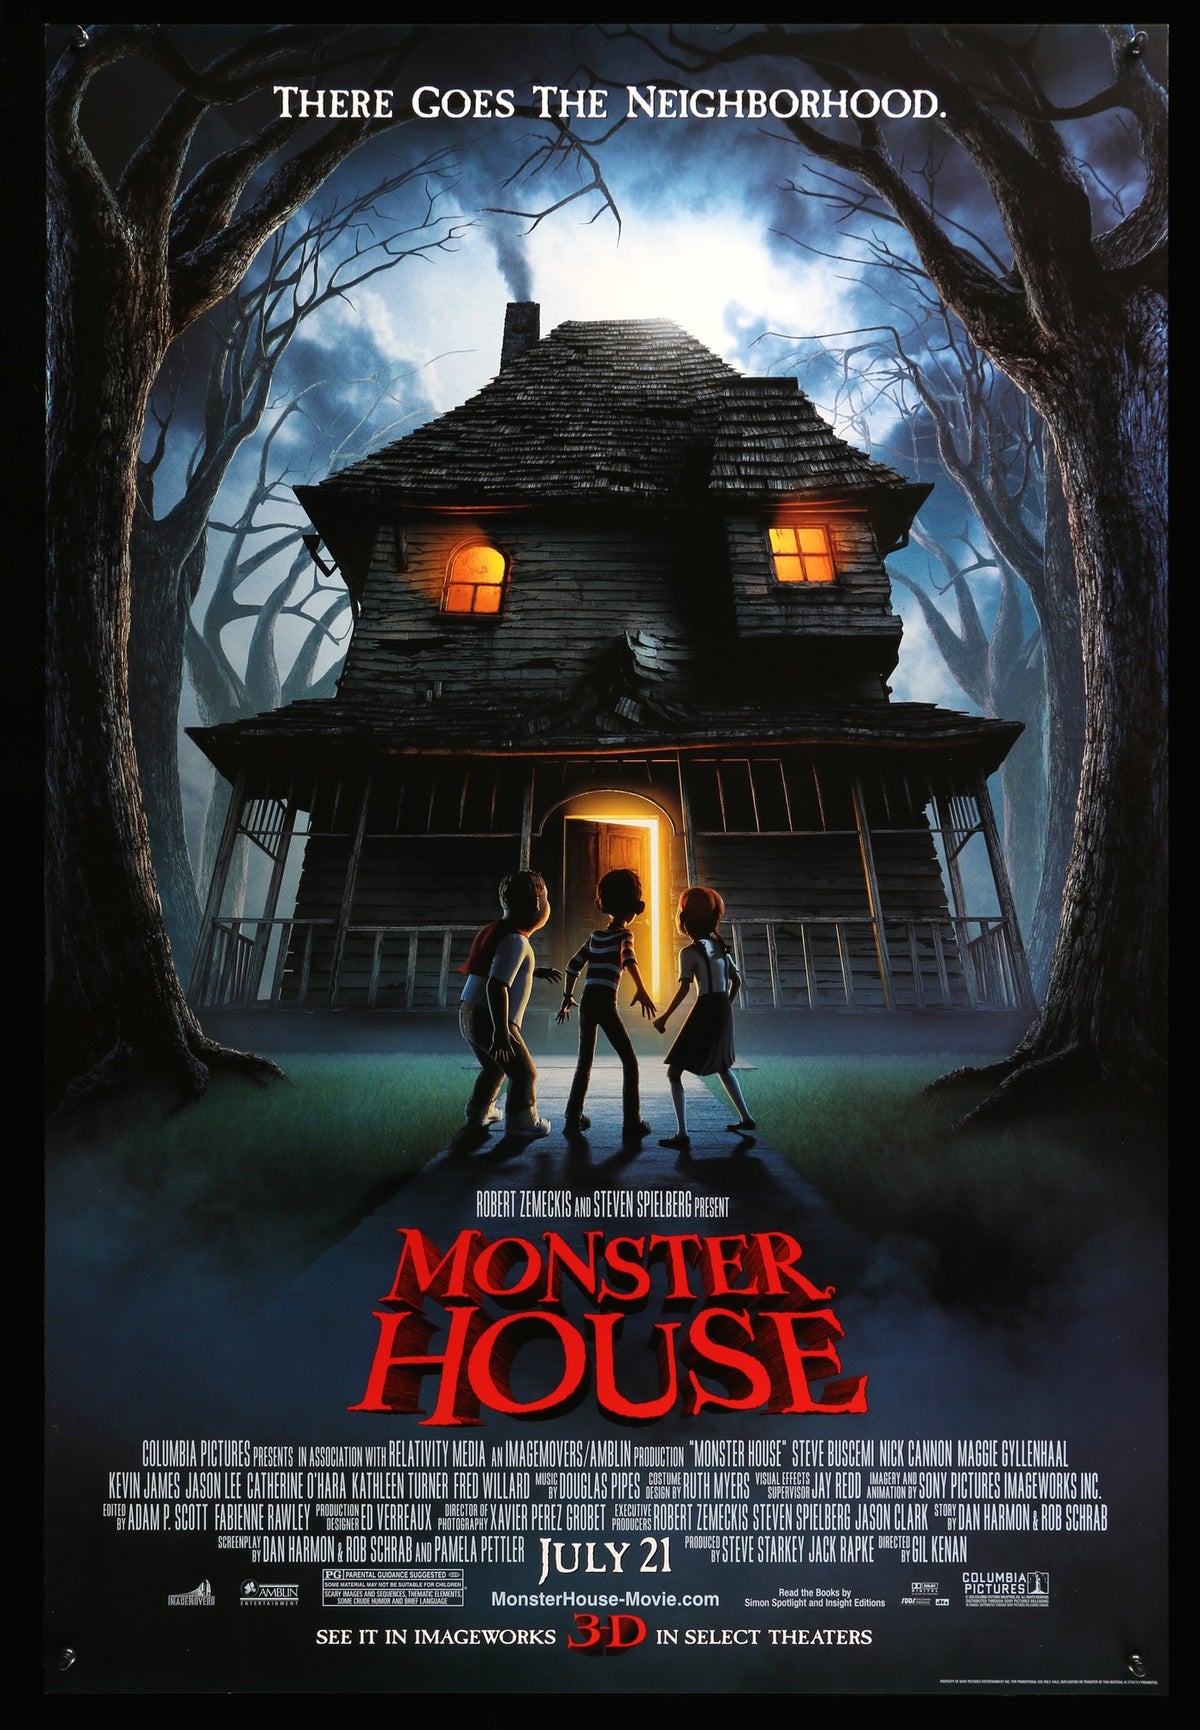 Monster House (2006) original movie poster for sale at Original Film Art